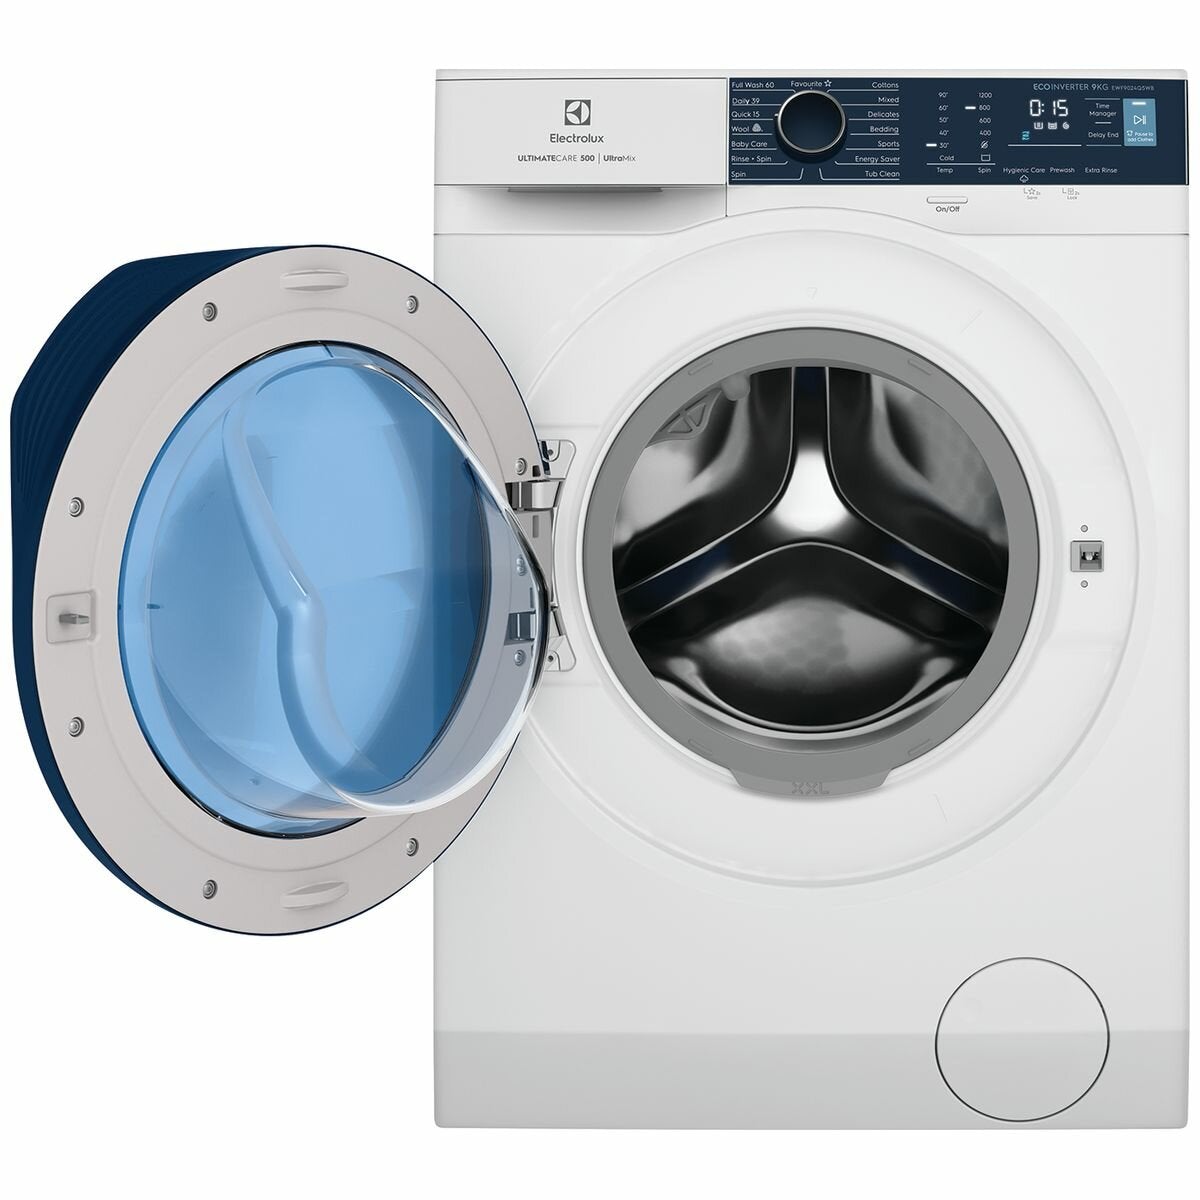 Electrolux Front Load Washing Machine 9 kg - Brisbane Home Appliances